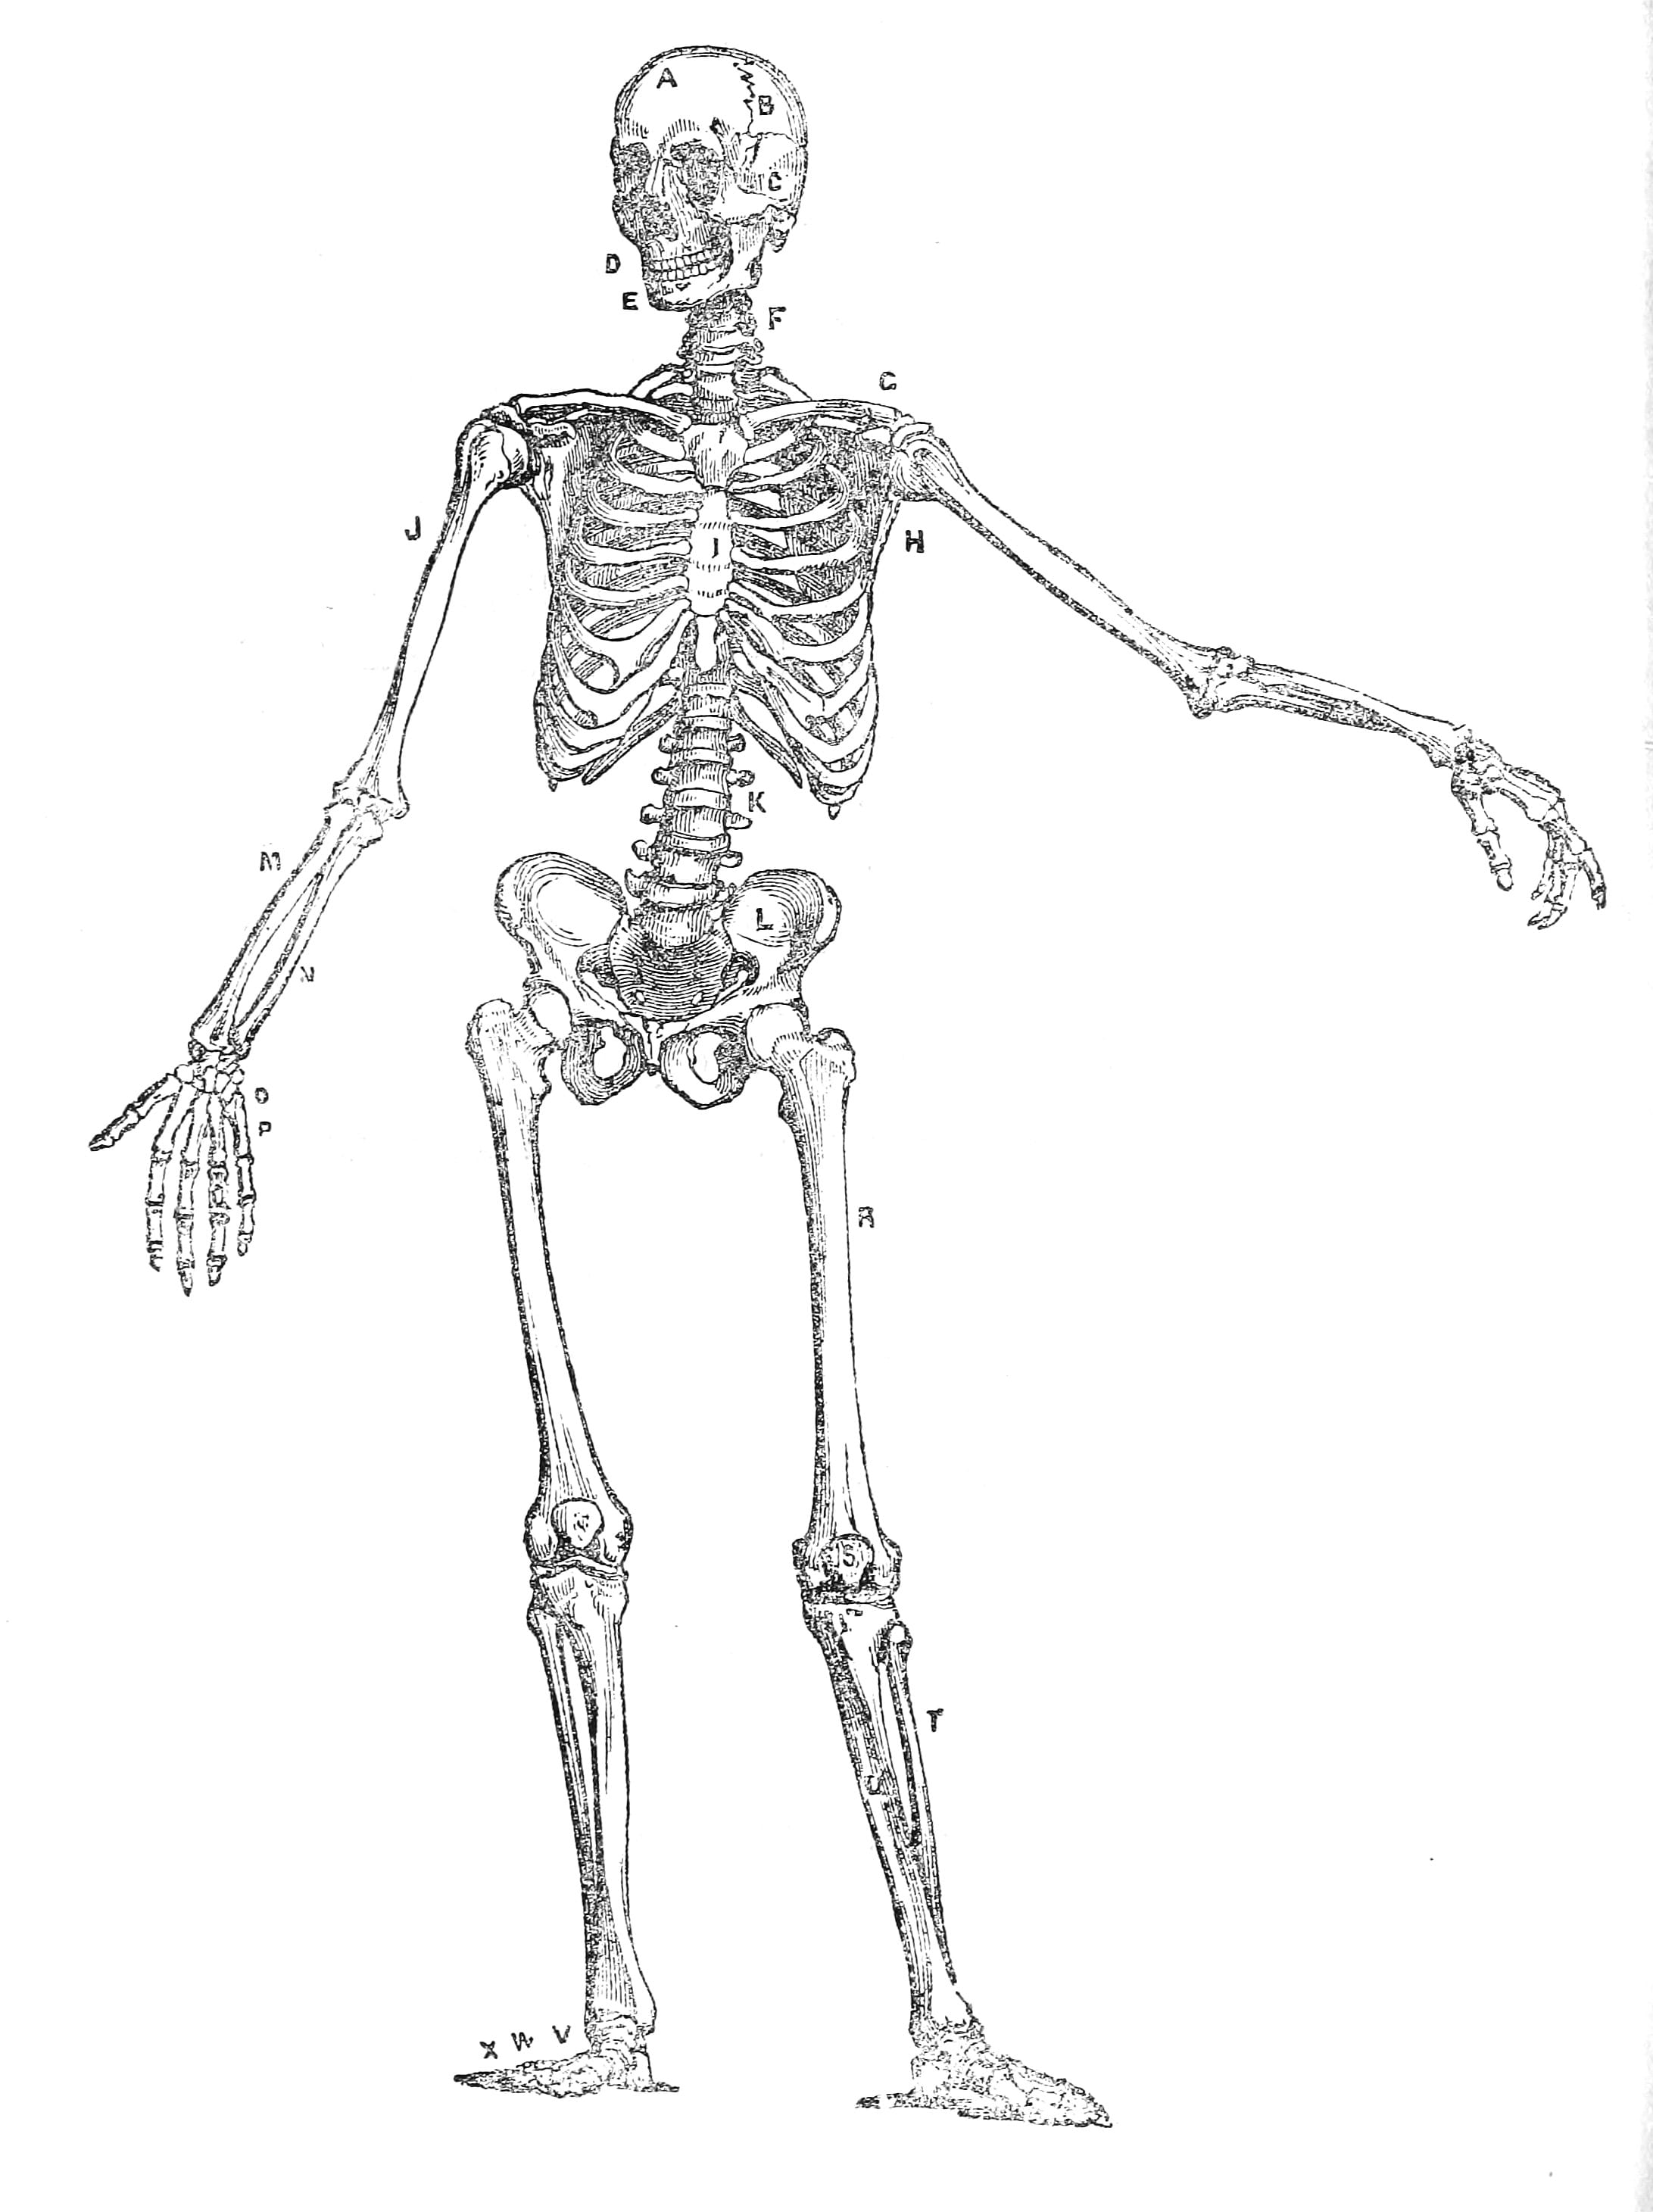 Vintage Human Anatomy Illustration Skeleton Front View - Free Vintage ...